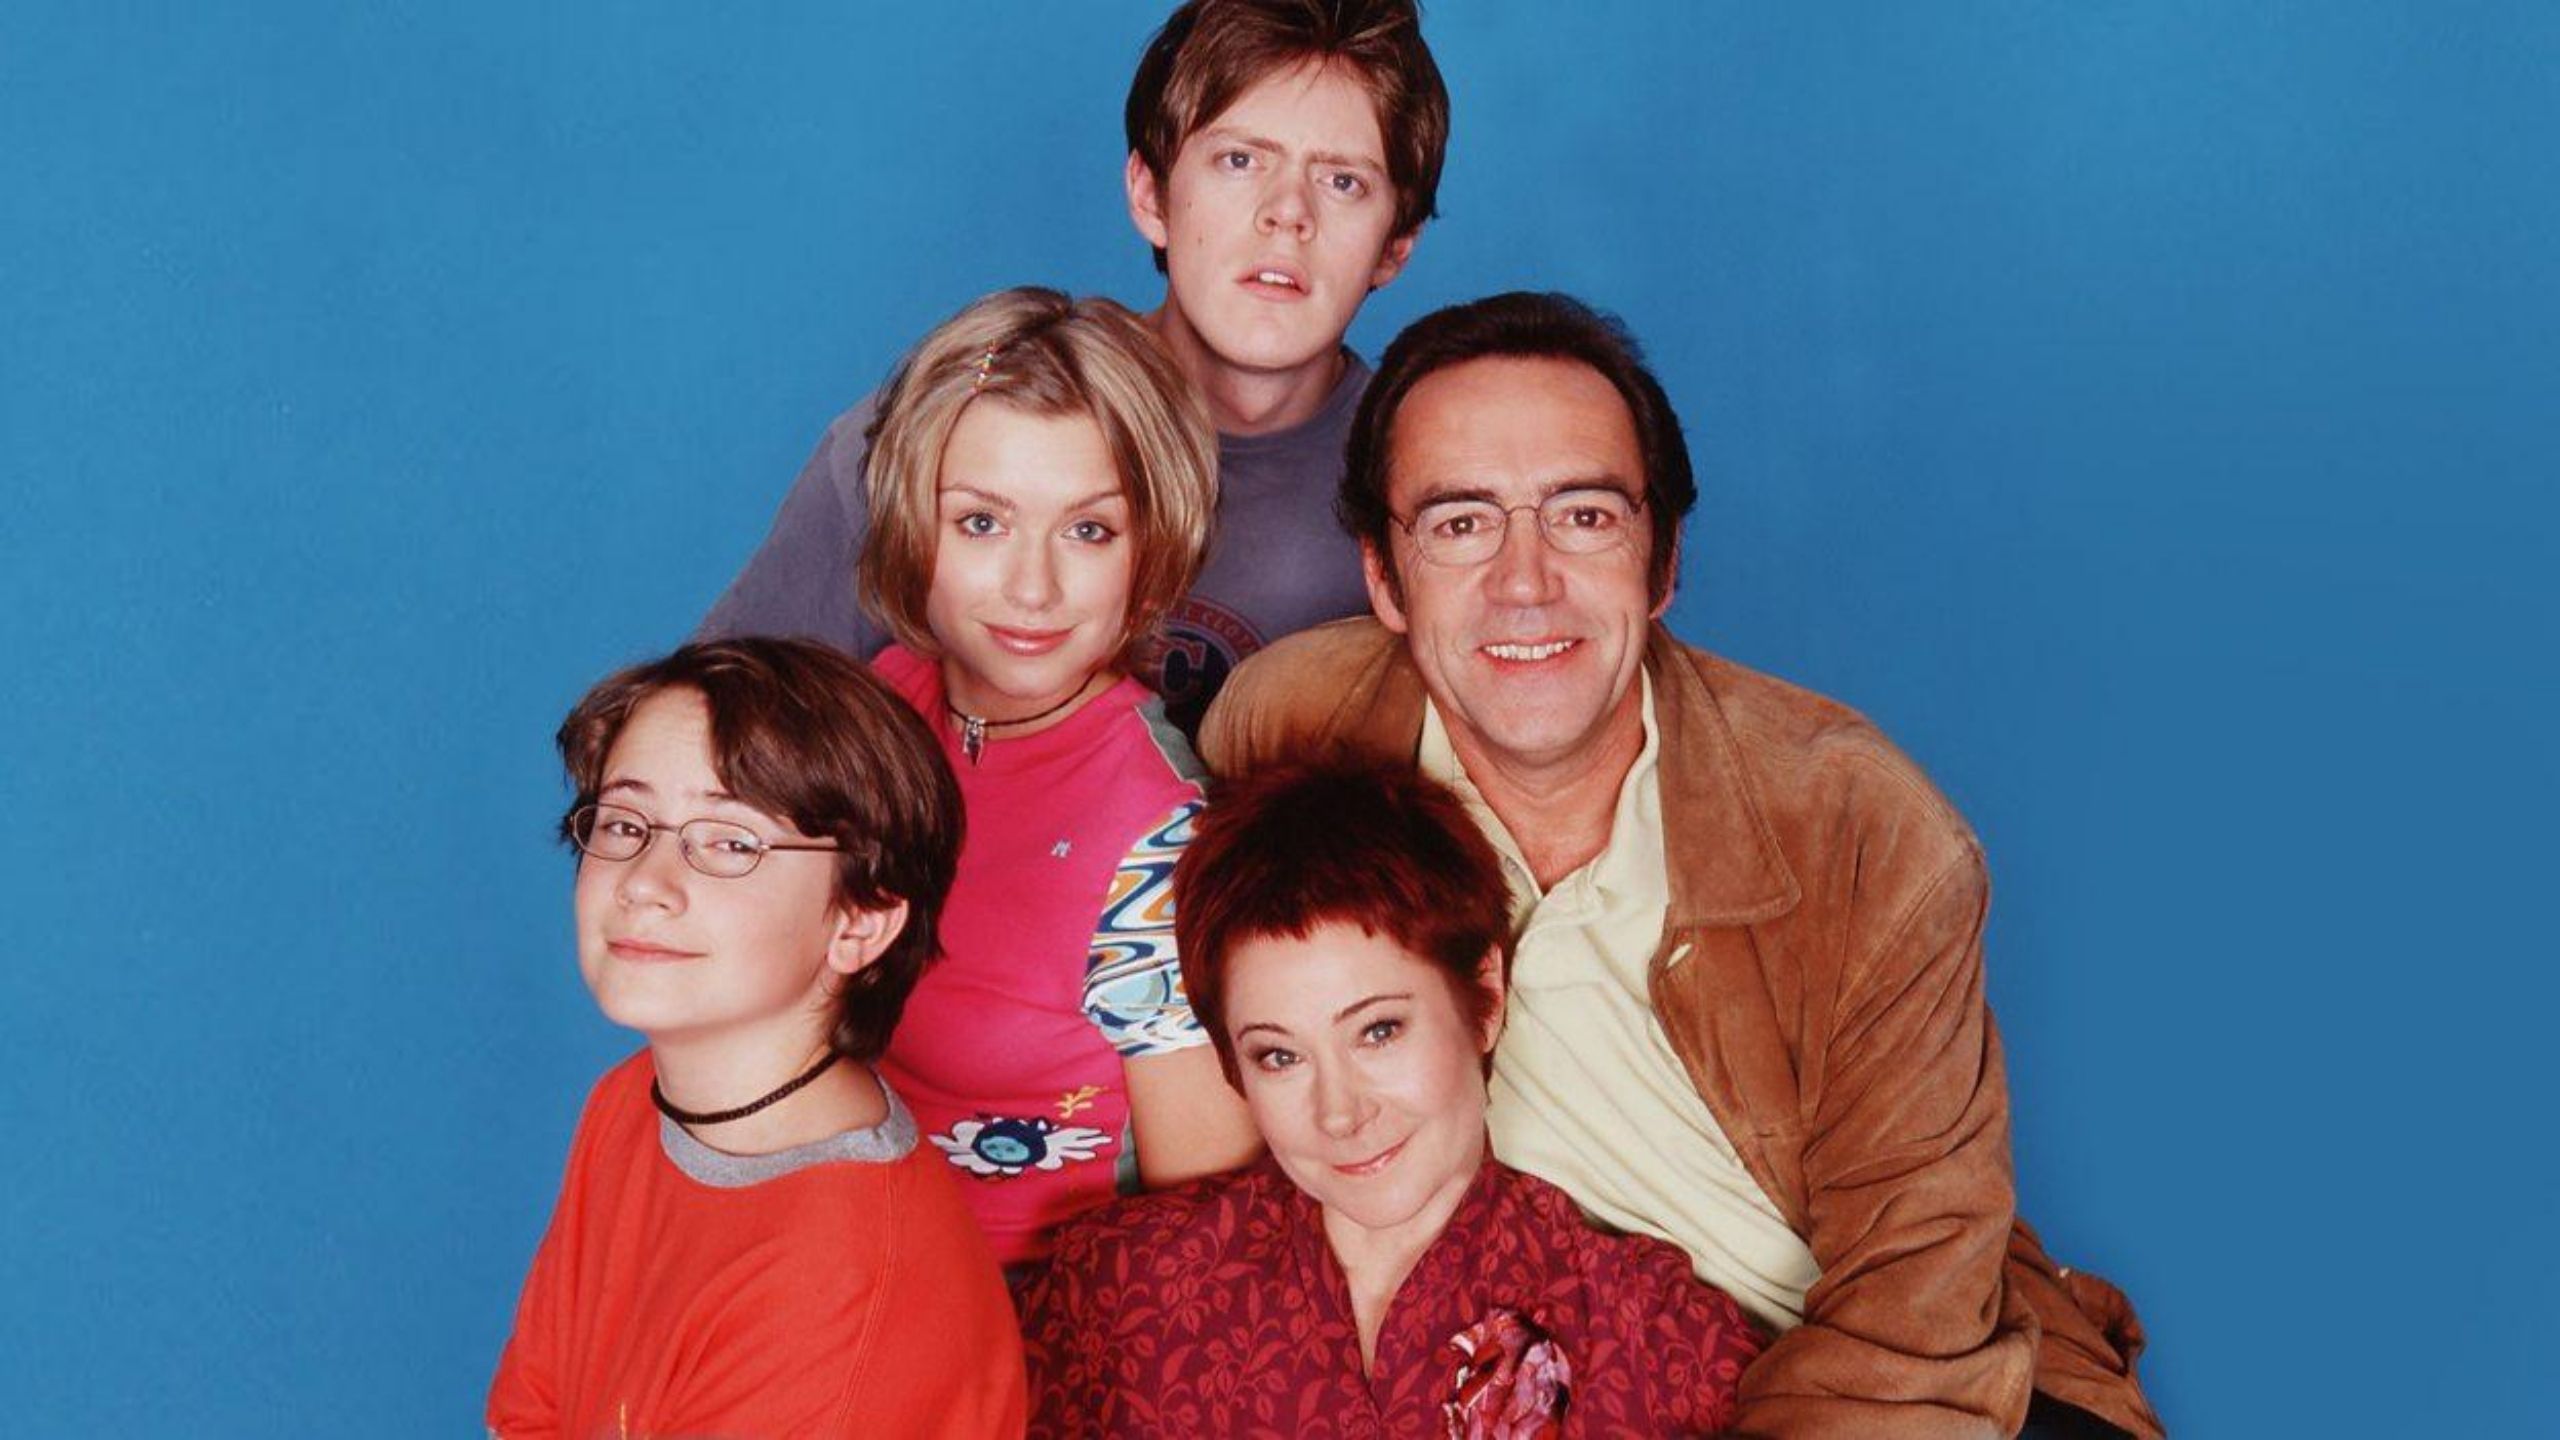 Classic 90s style family portrait